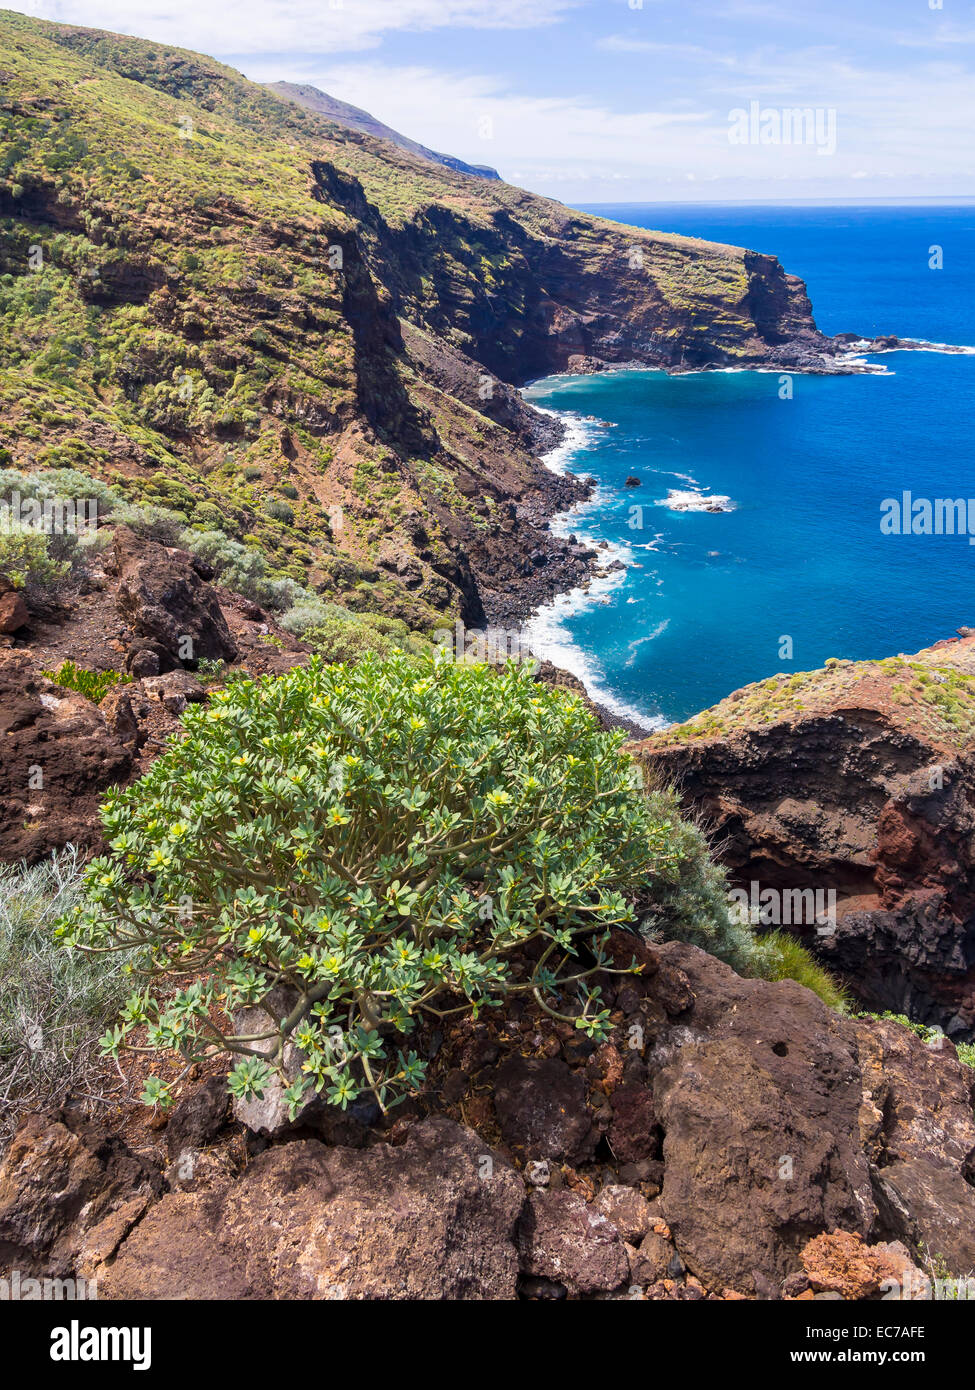 Spain, Canary Islands, La Palma, Punta del Puerto Viejo, Cliff coast near Garafia, Euphorbia in the foreground Stock Photo